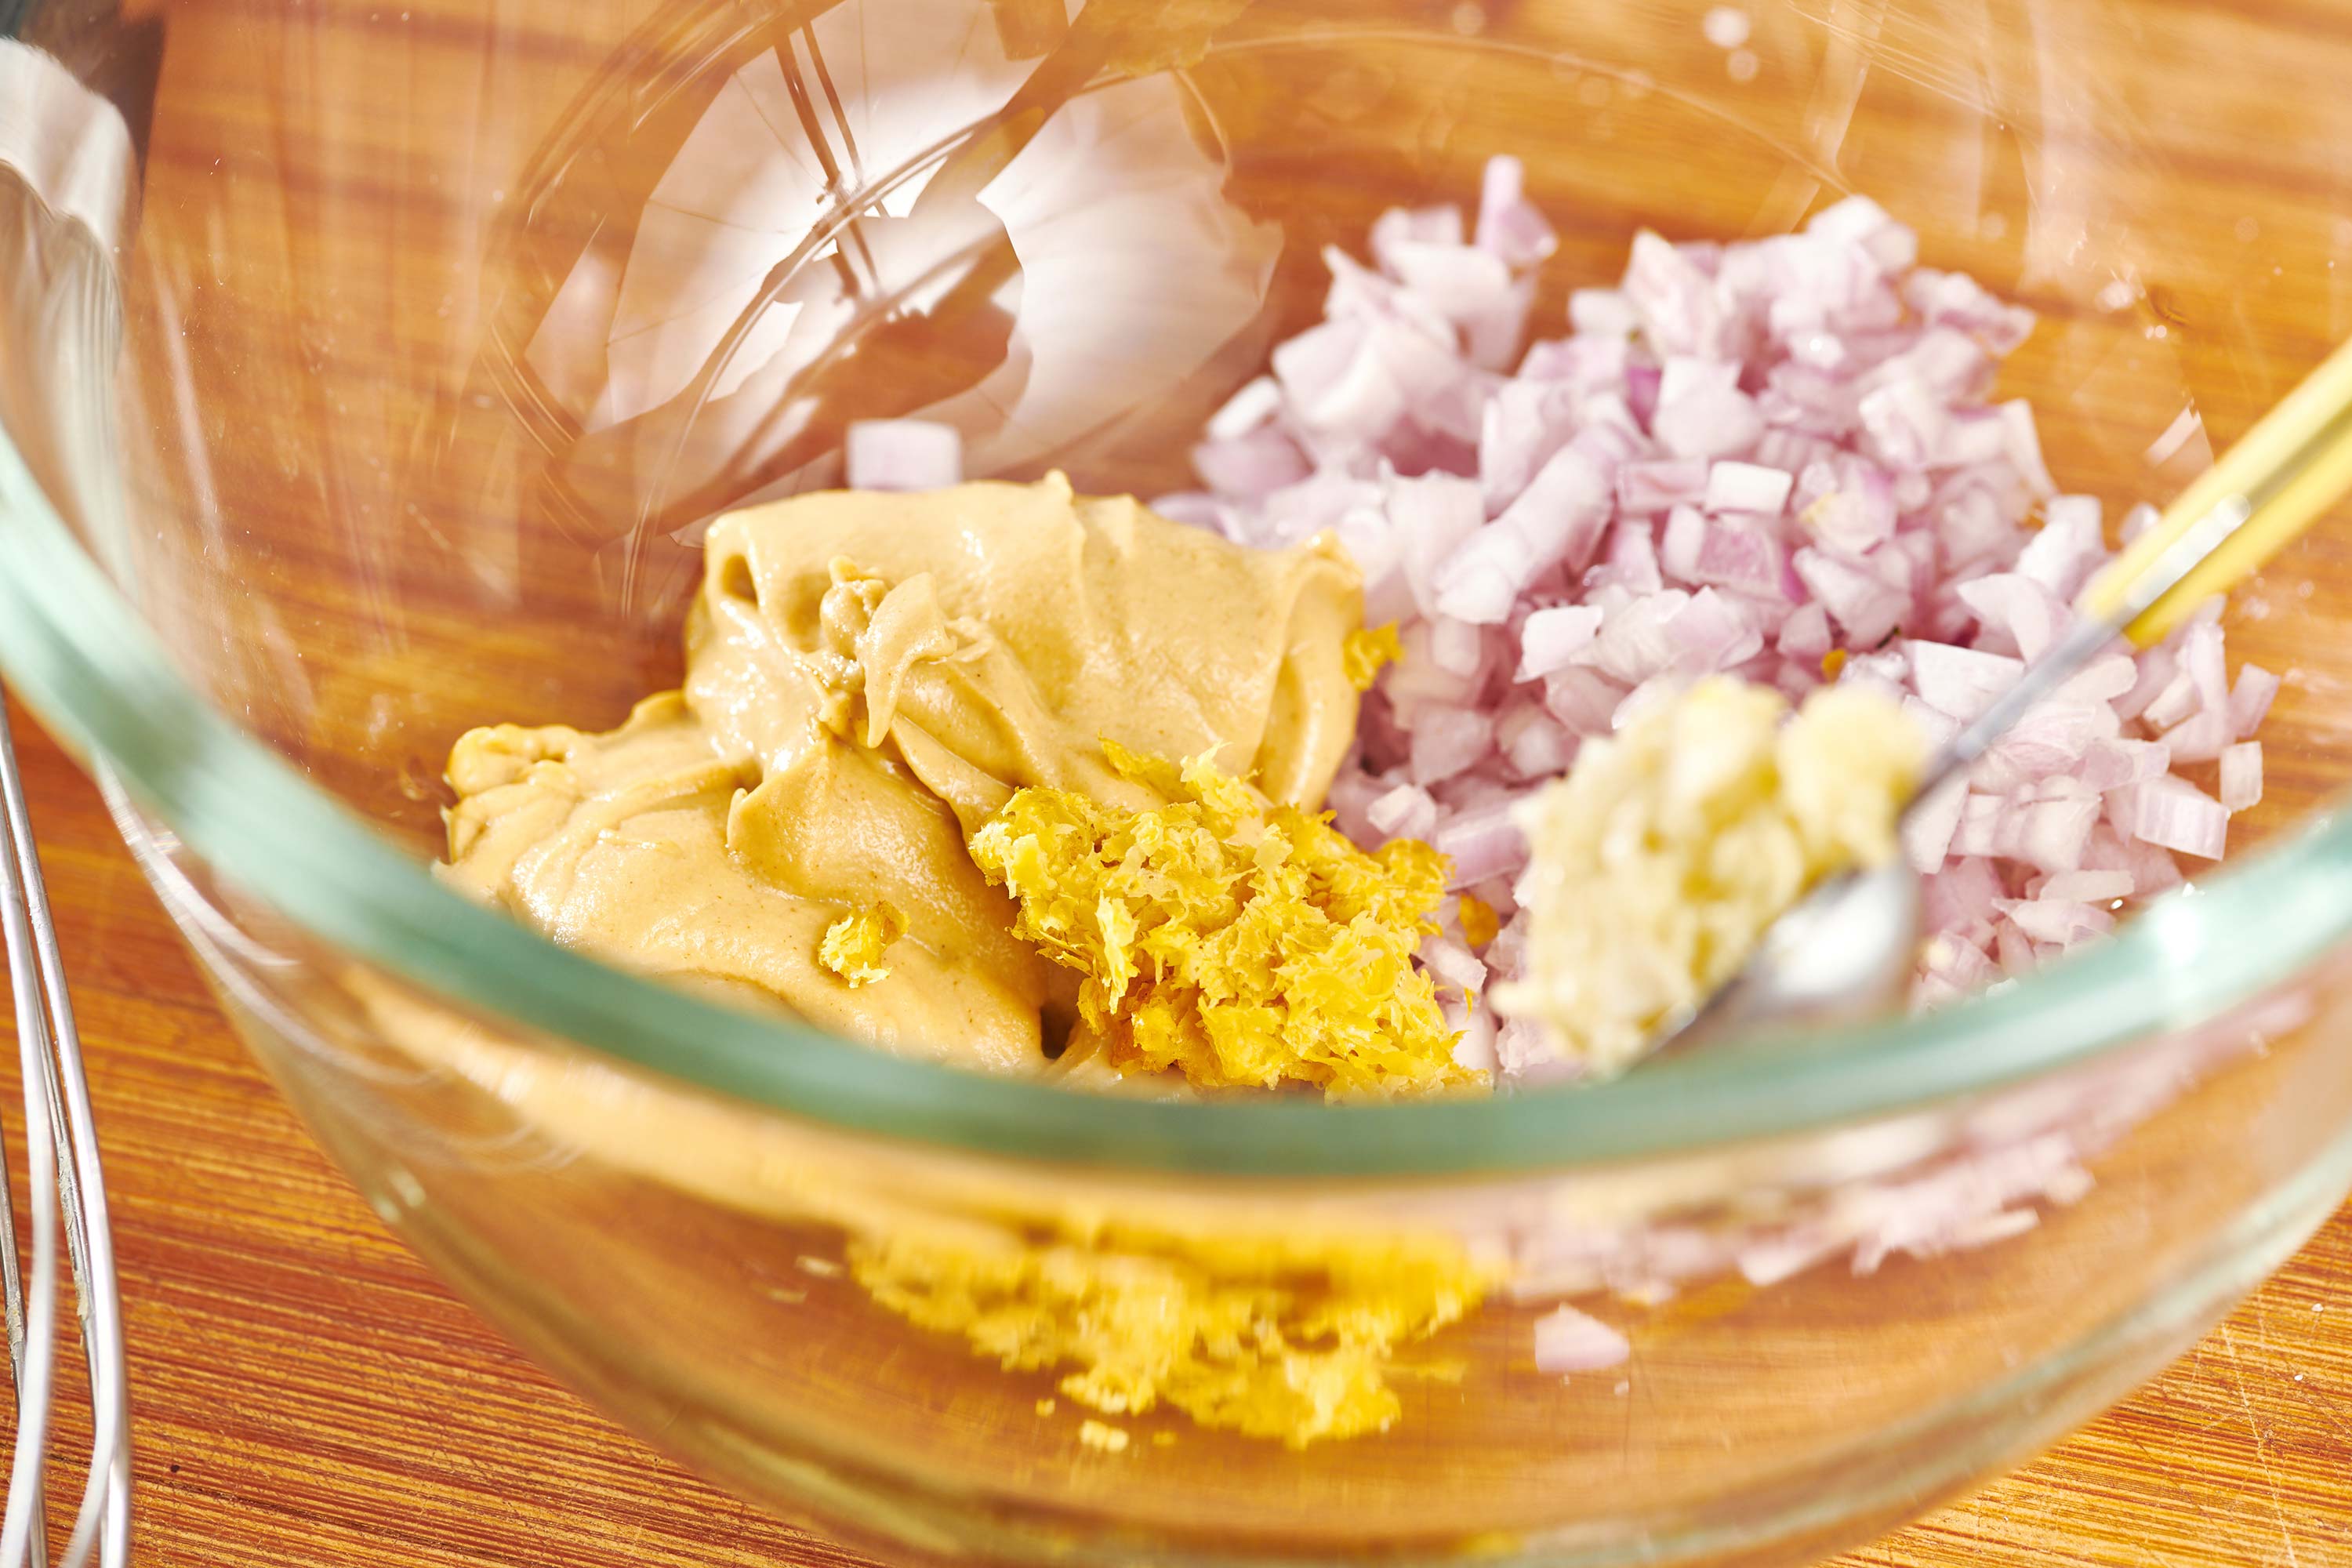 Ingredients for lemon garlic marinade in a glass bowl.